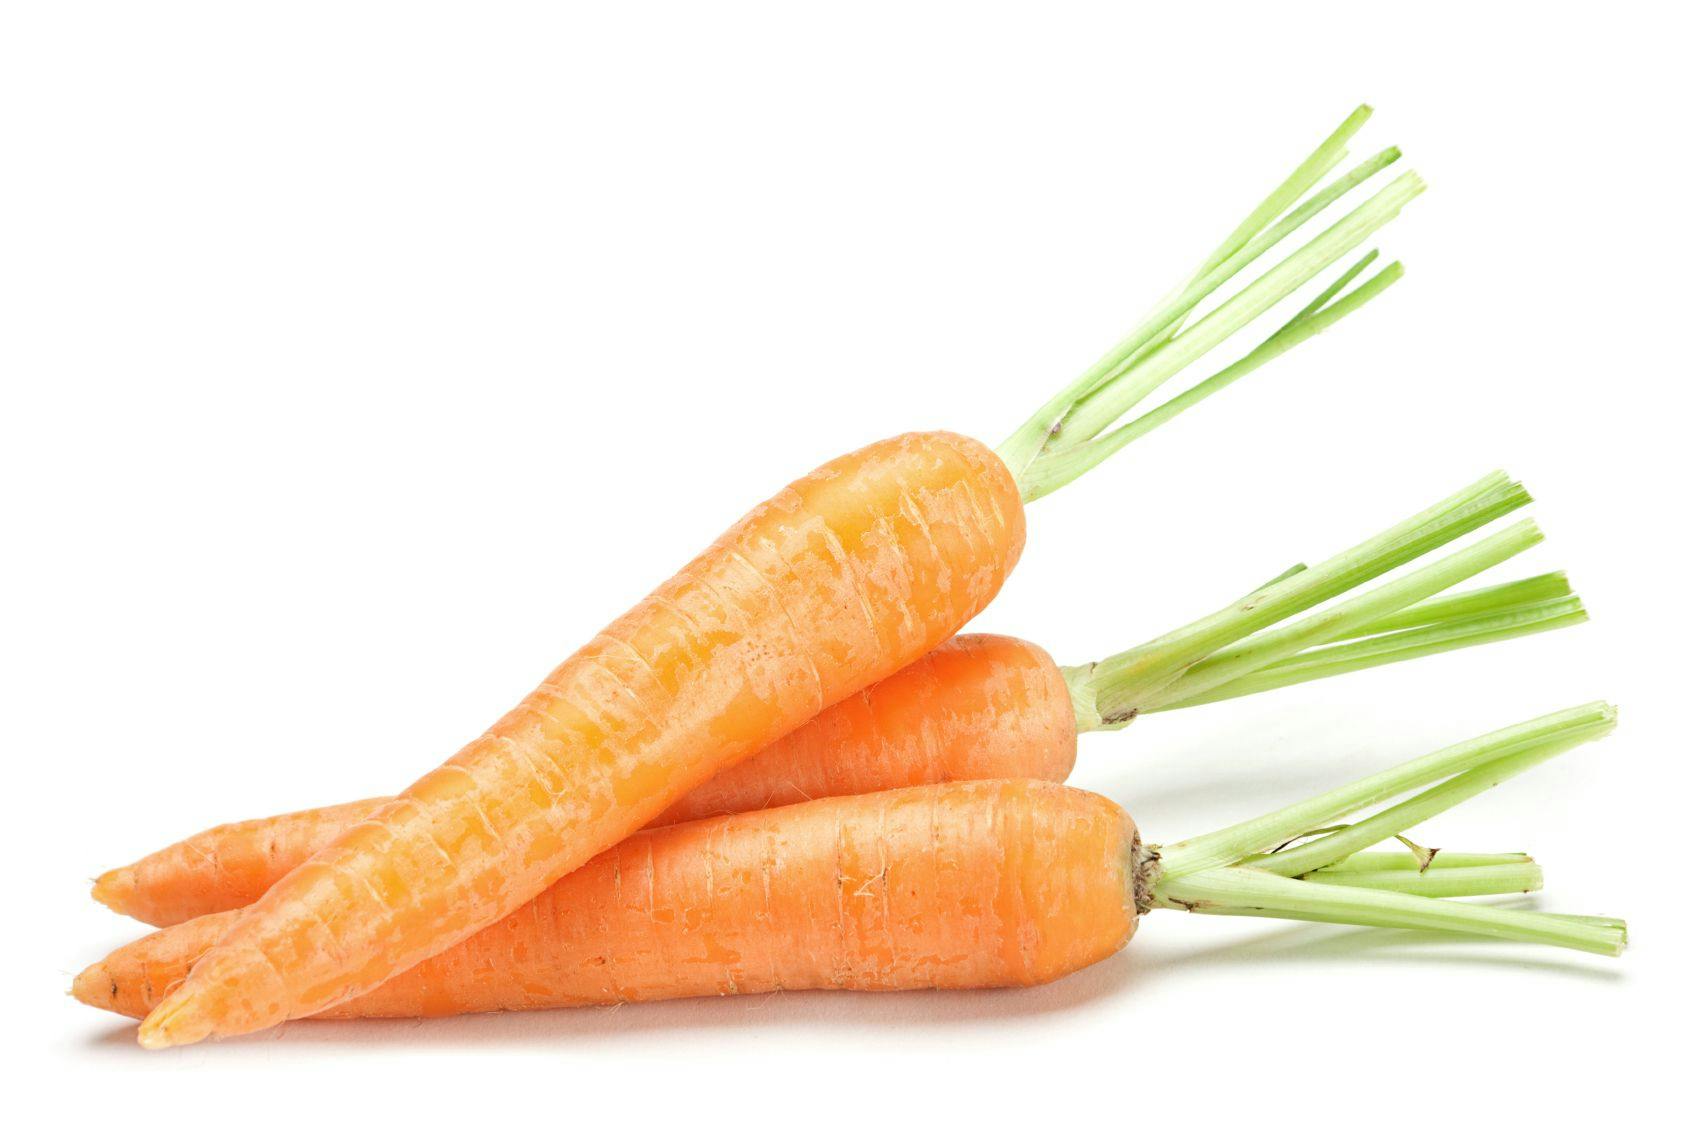 Fun Fact: Carrots